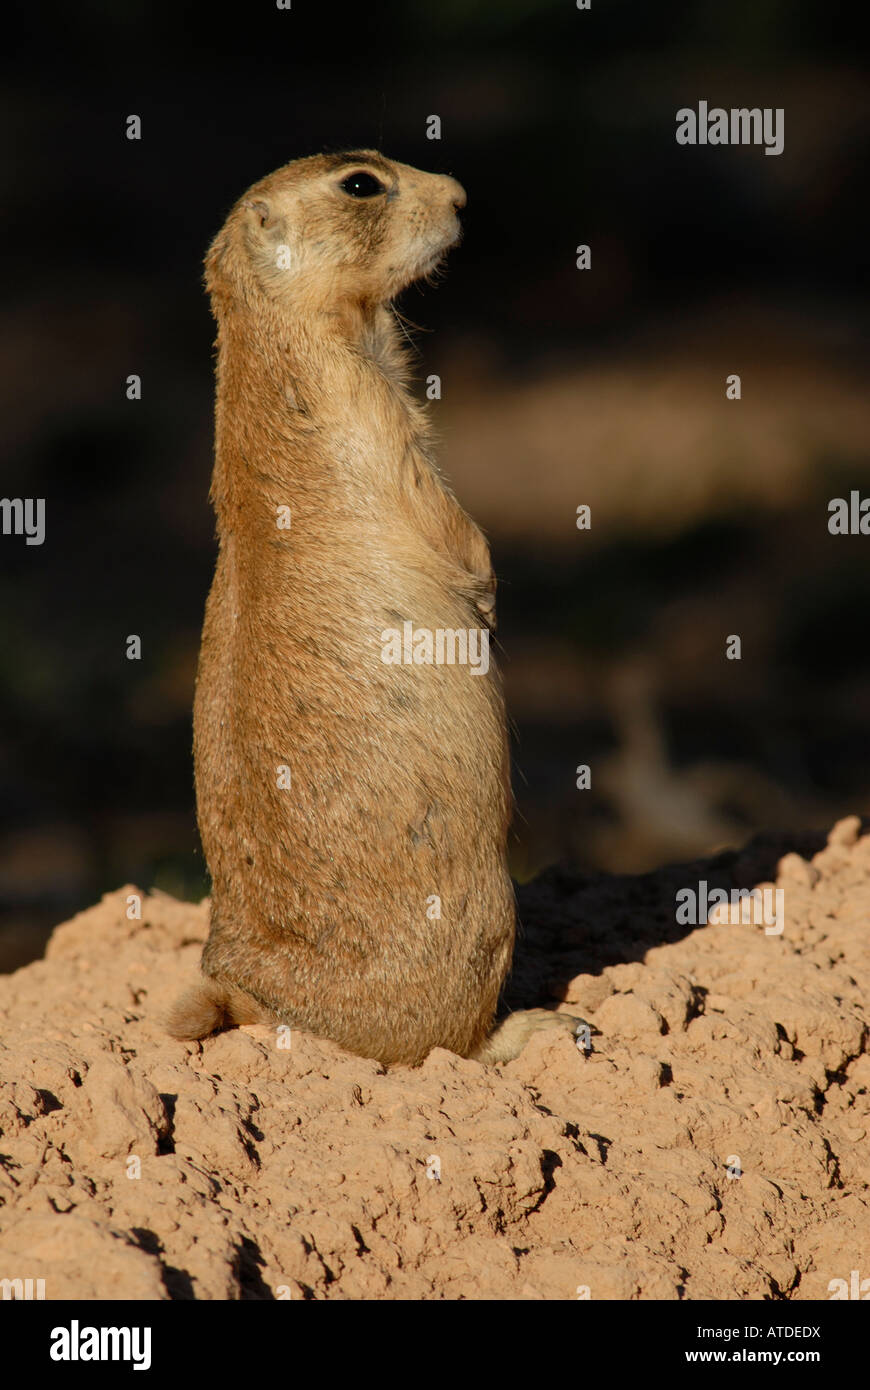 Stock photo profile of a Utah prairie dog standing upright. Stock Photo